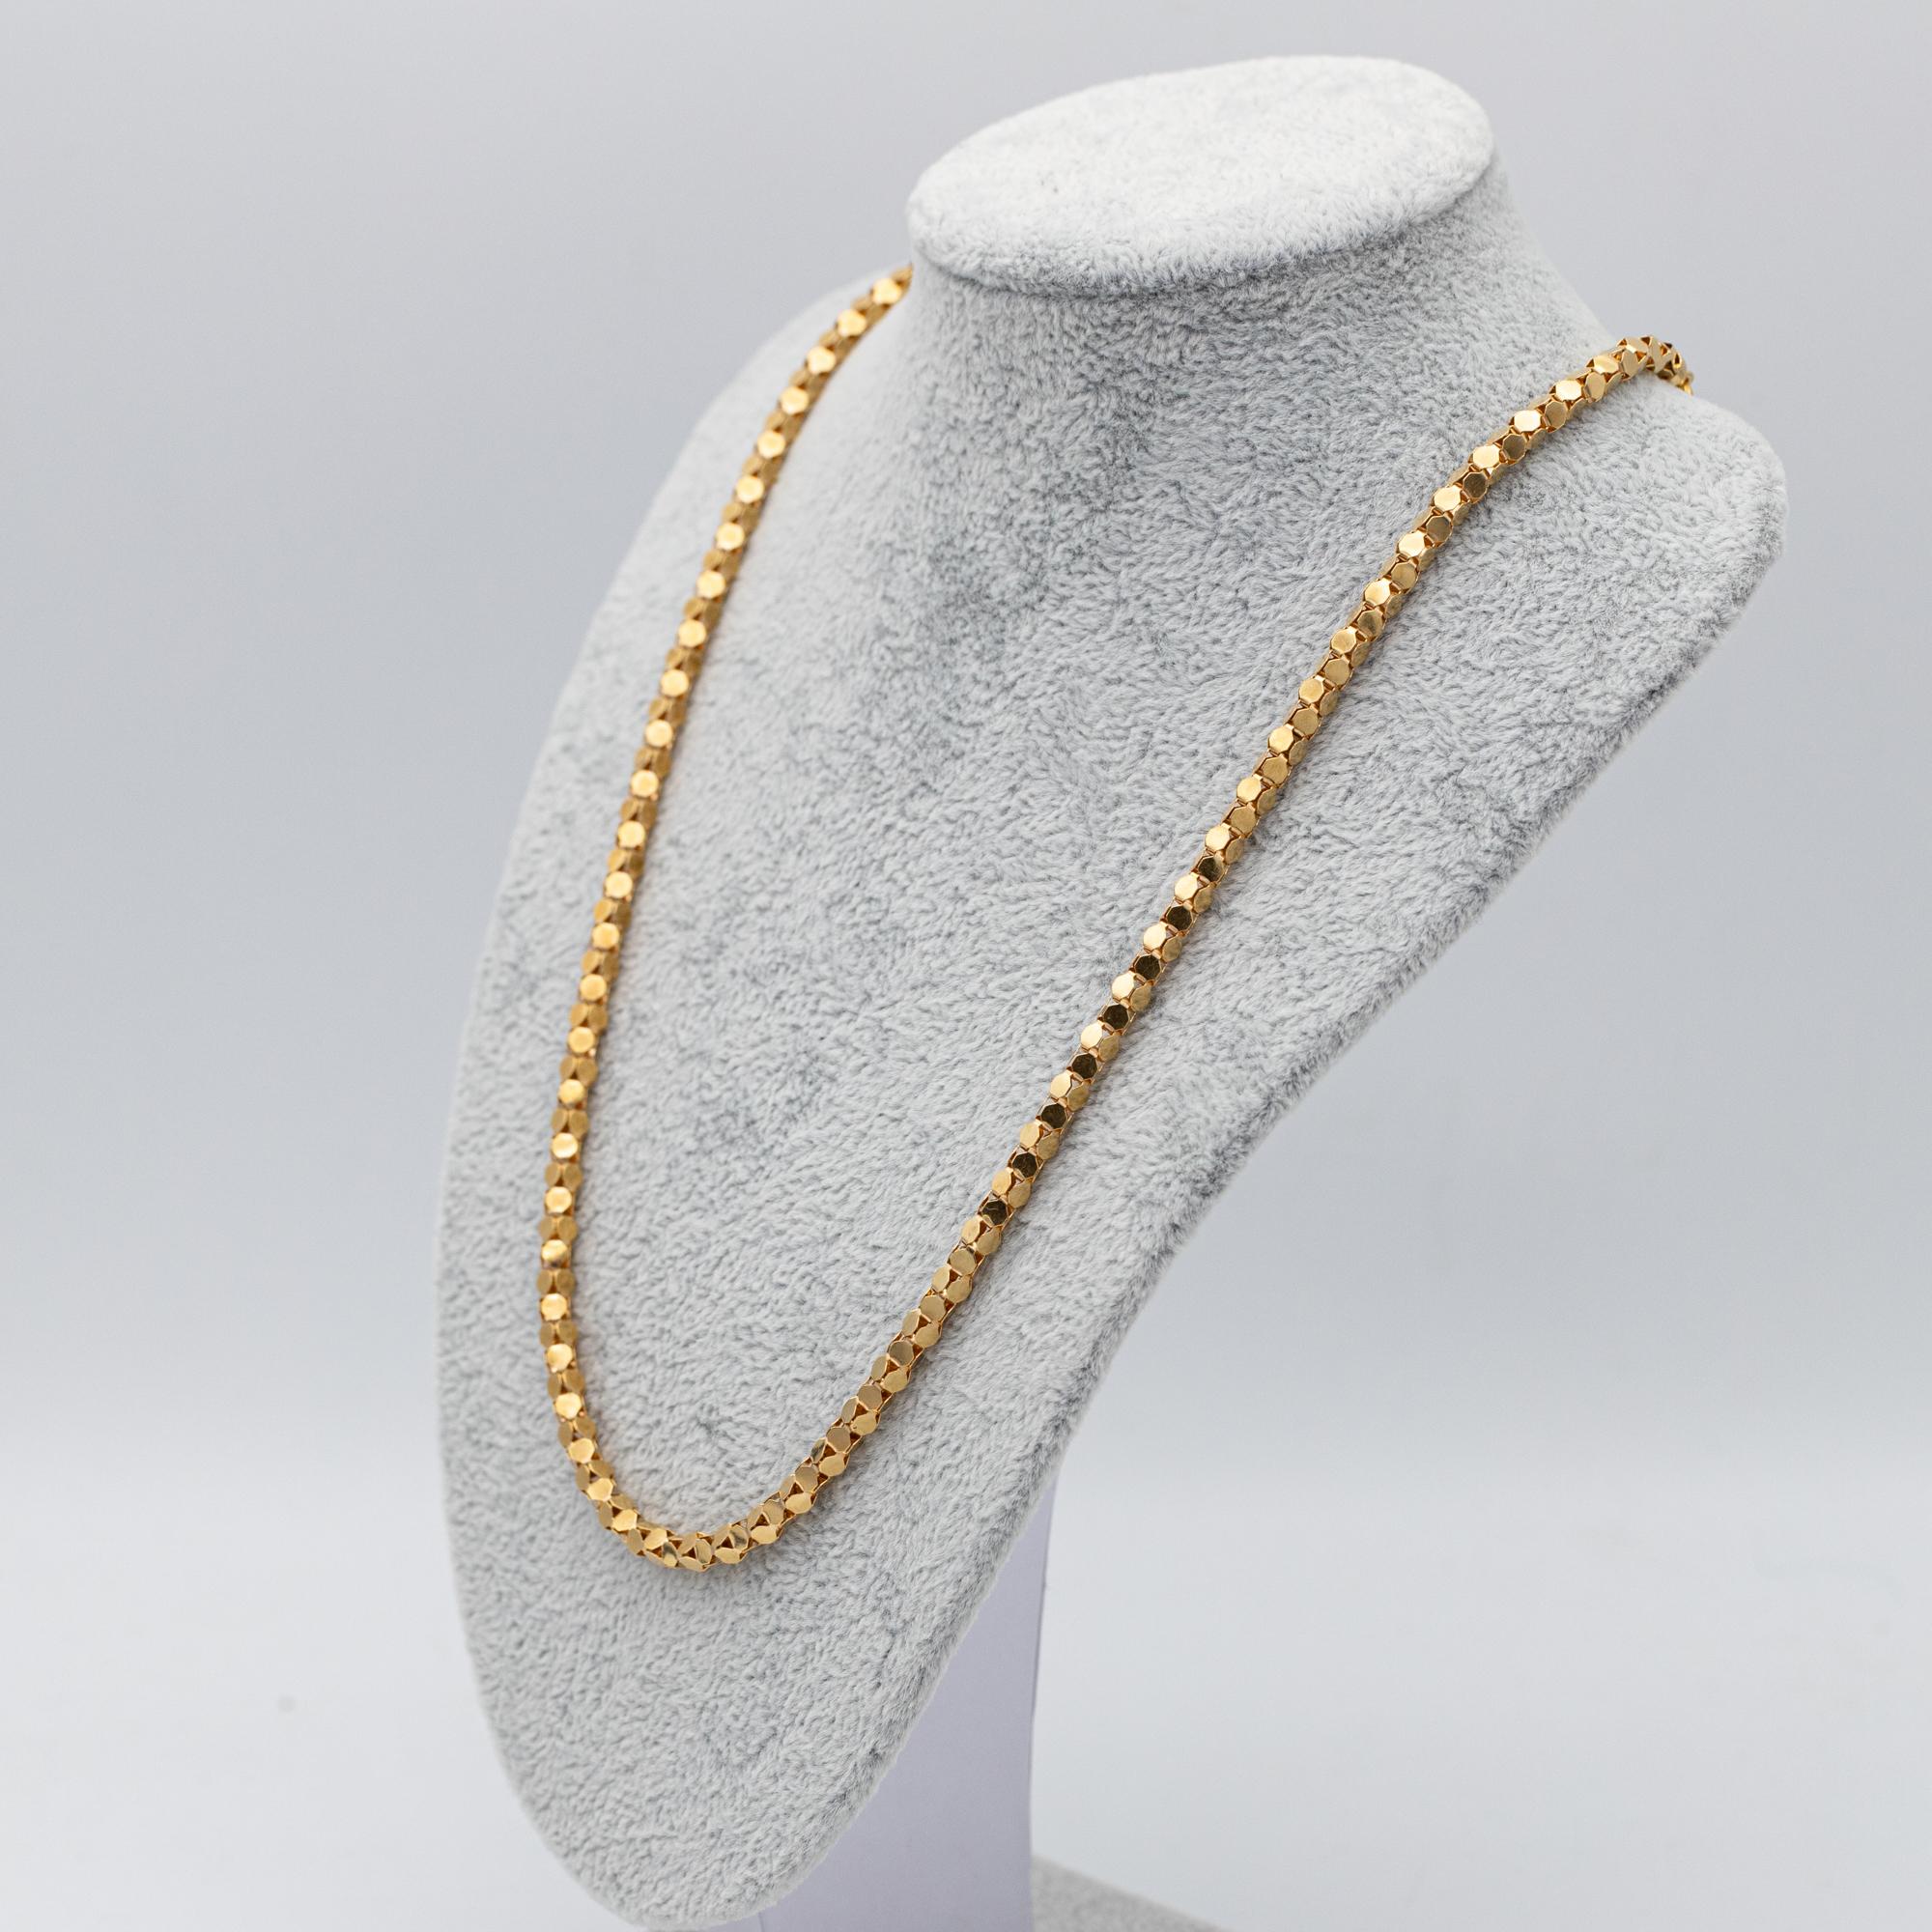 18k solid gold Retro popcorn chain - Italian 1960's necklace - 63.5 cm - 25 inch For Sale 3